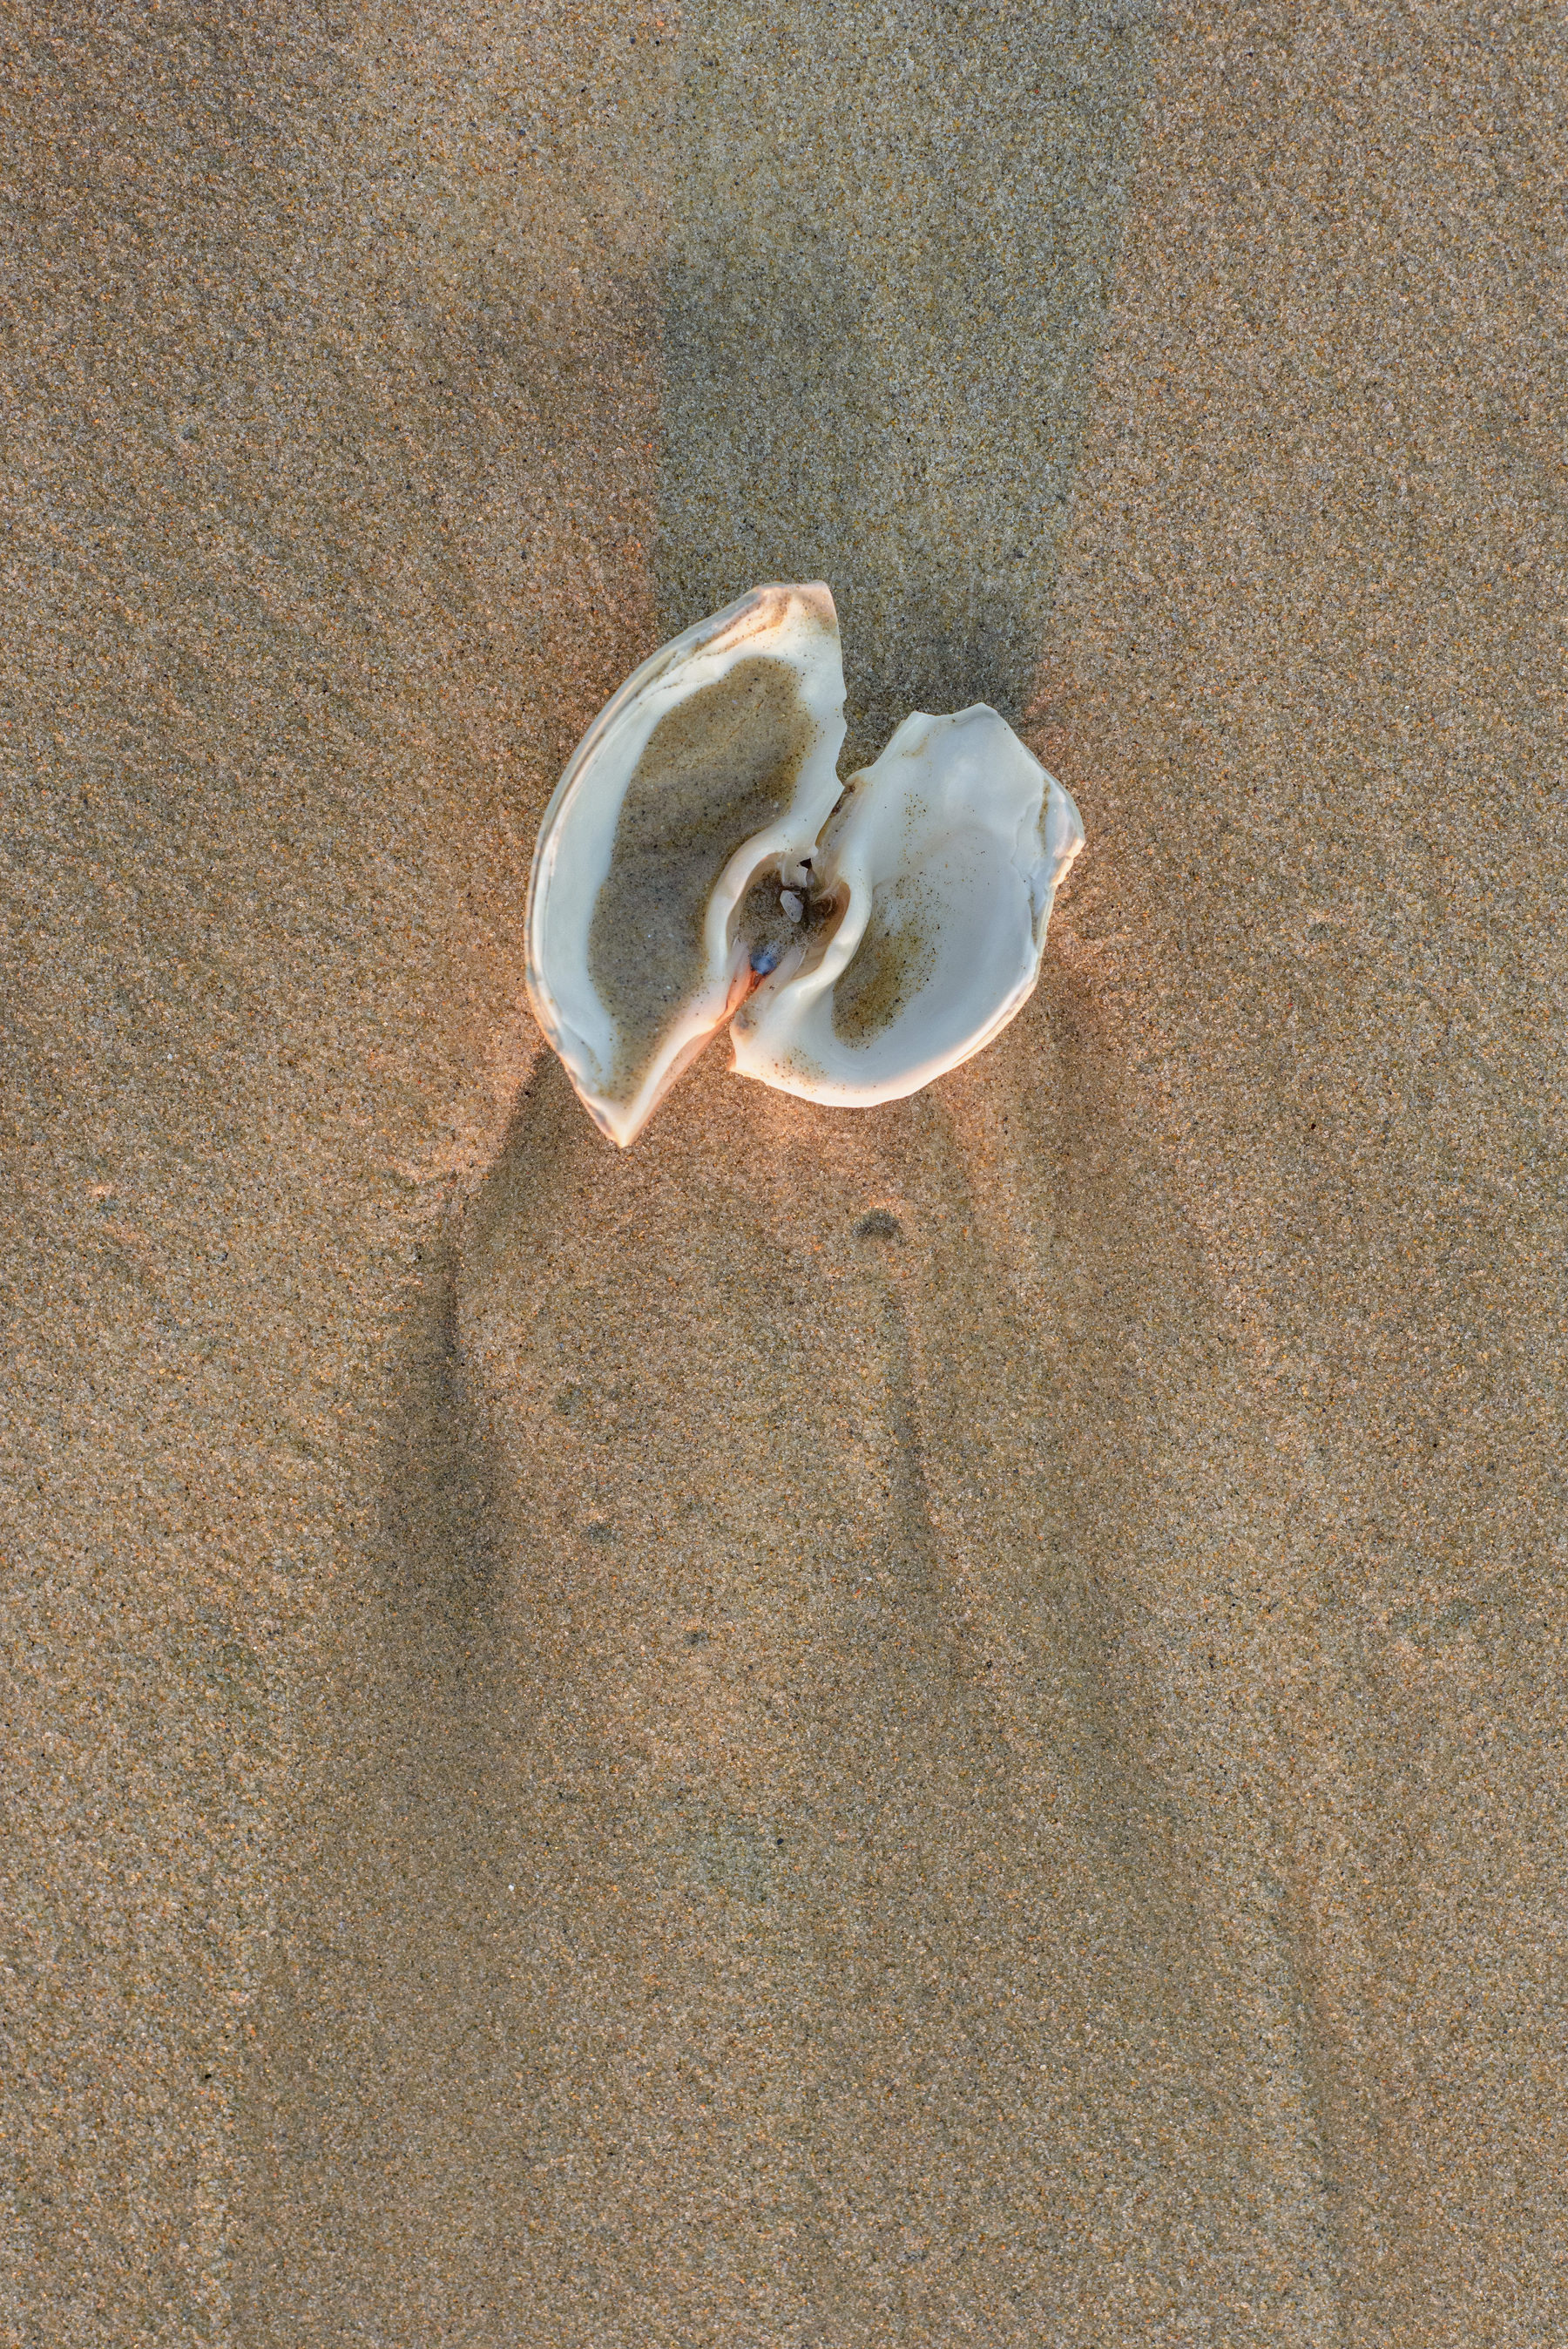 Broken mollusk shell in the sand. 